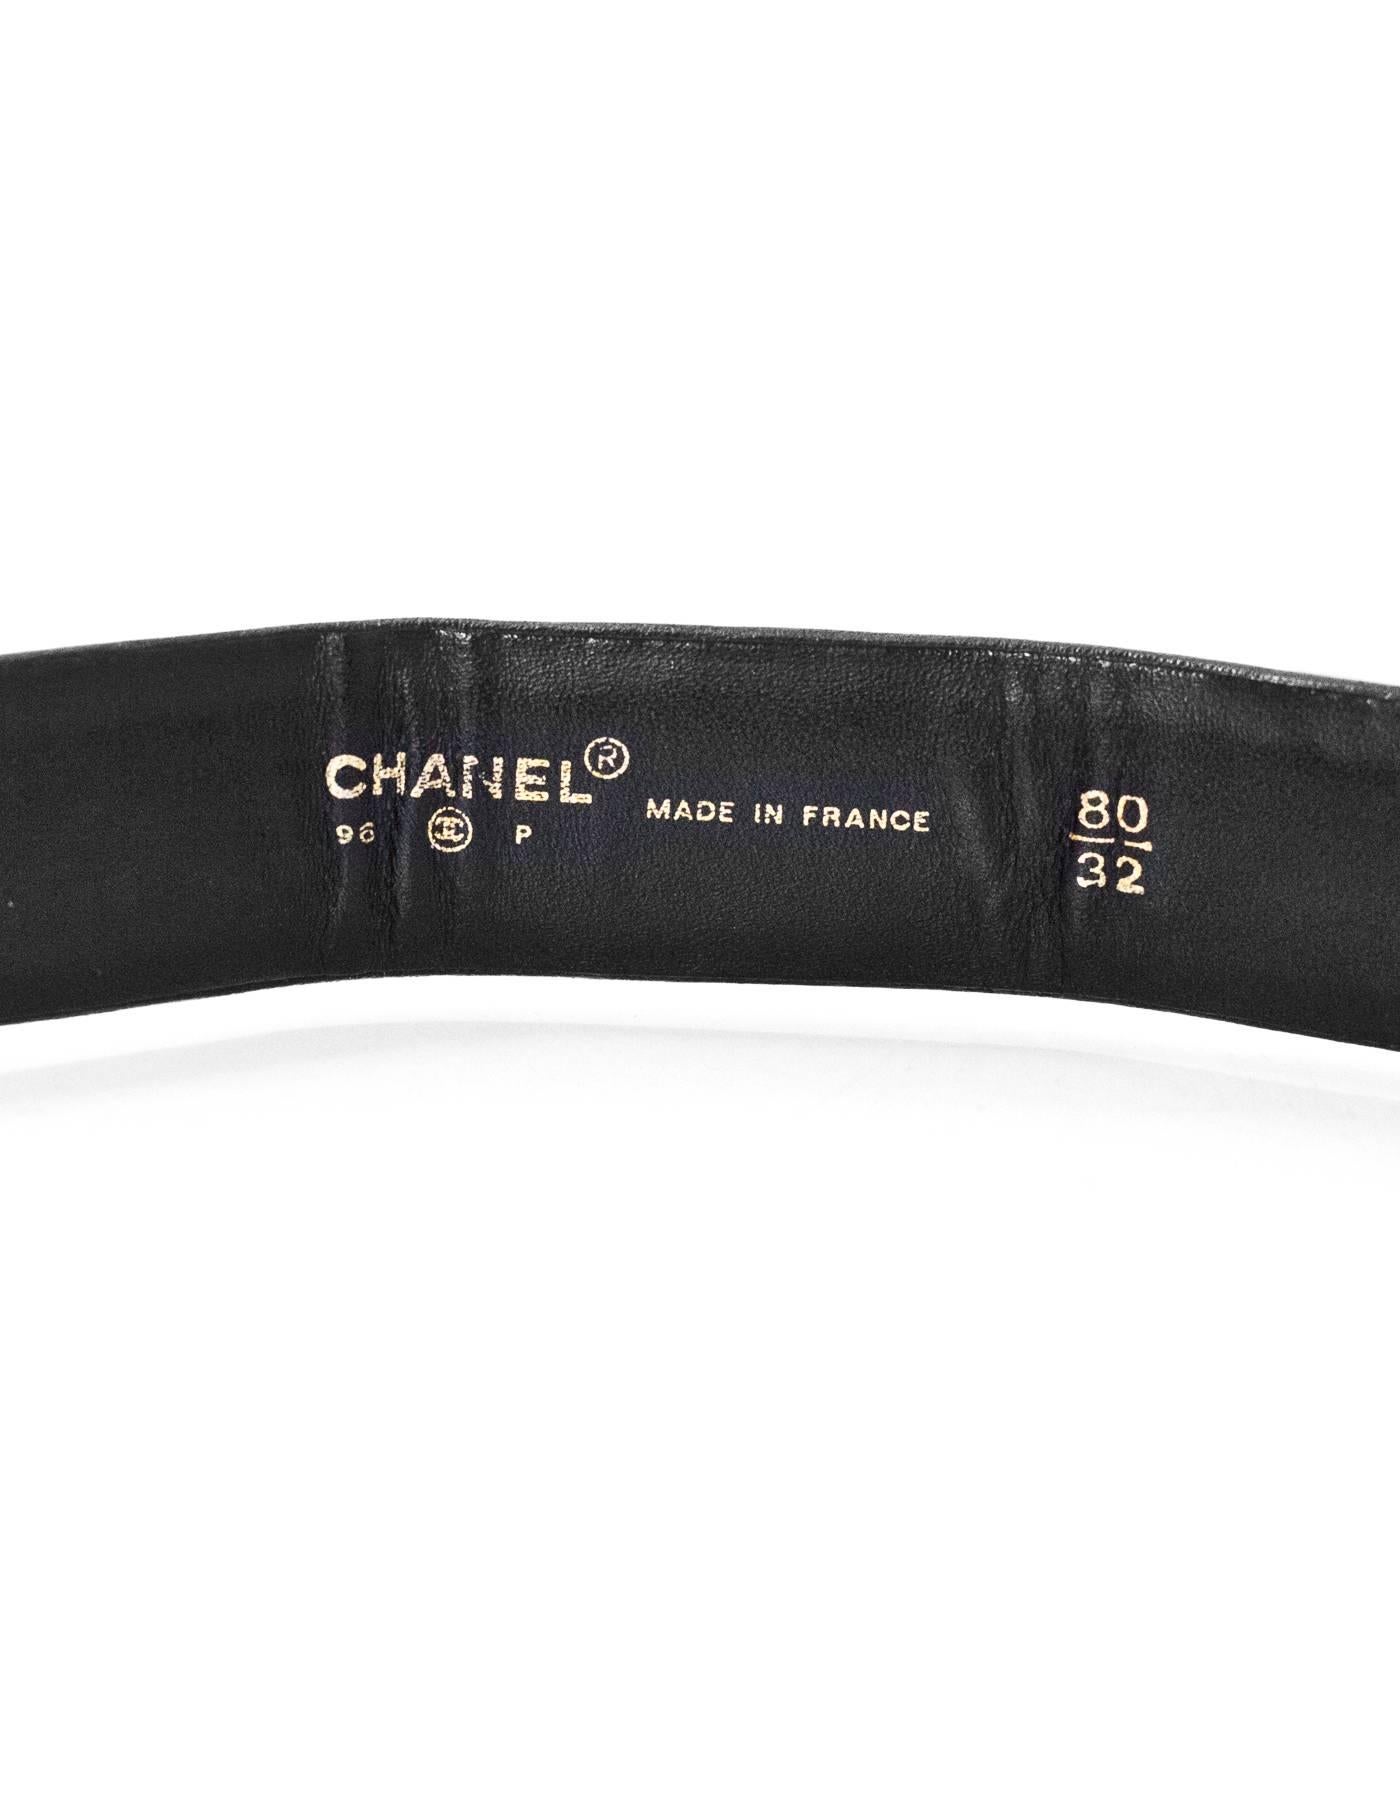 CHANEL Vintage '96 Black Leather Charm Belt sz 80 2